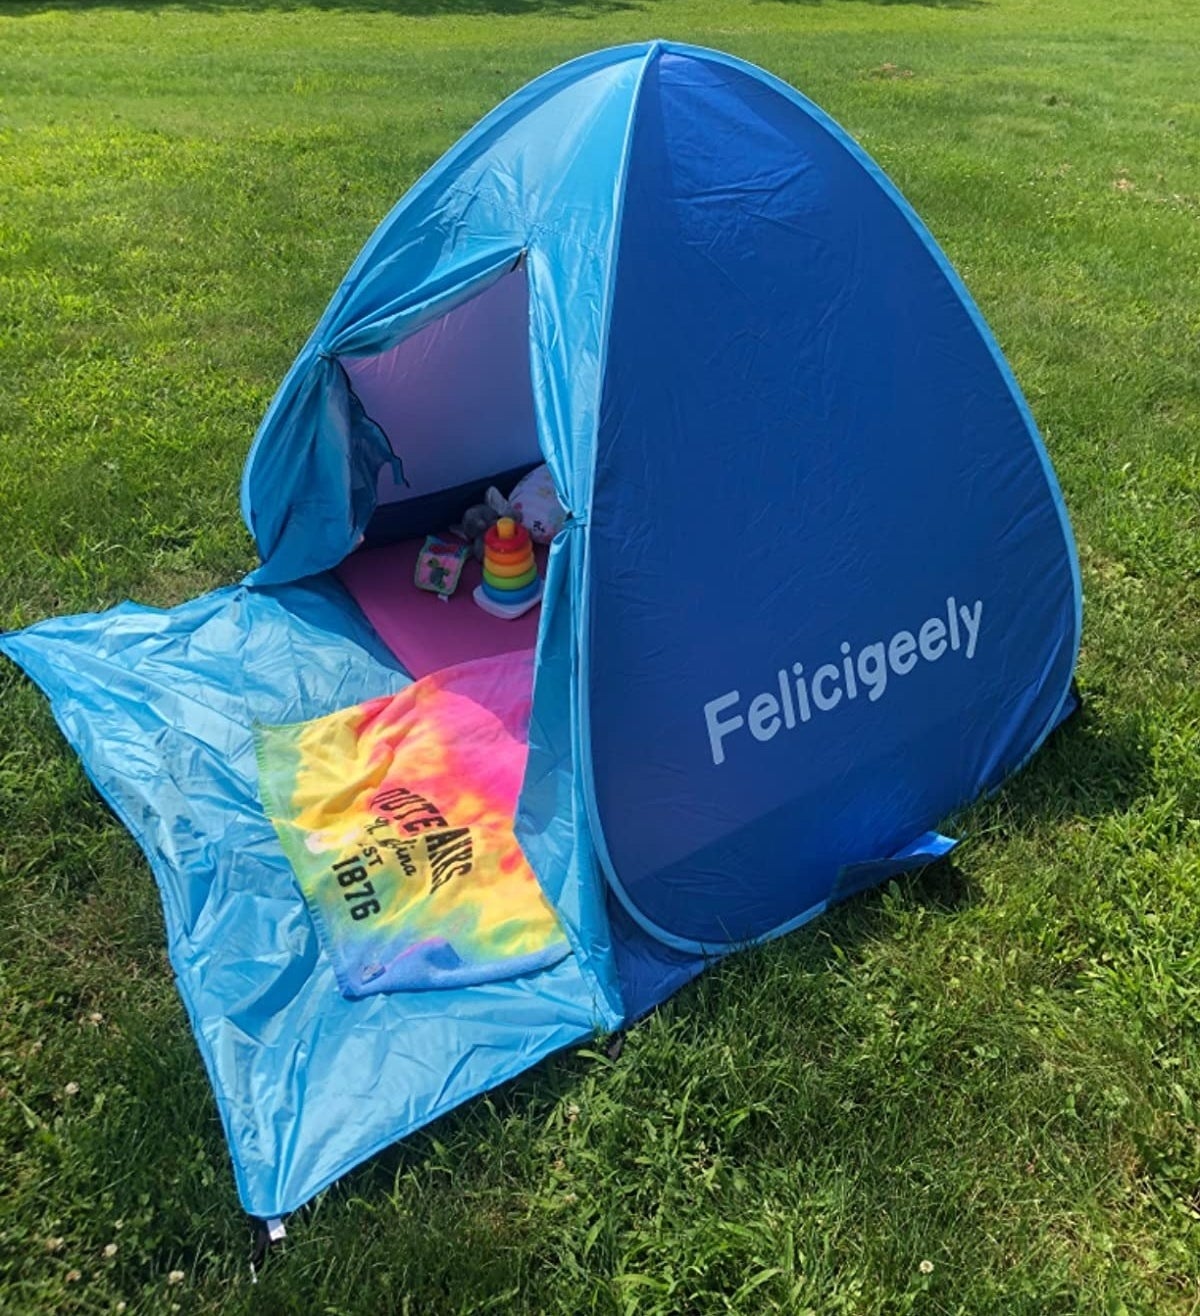 A pop-up tent in a yard